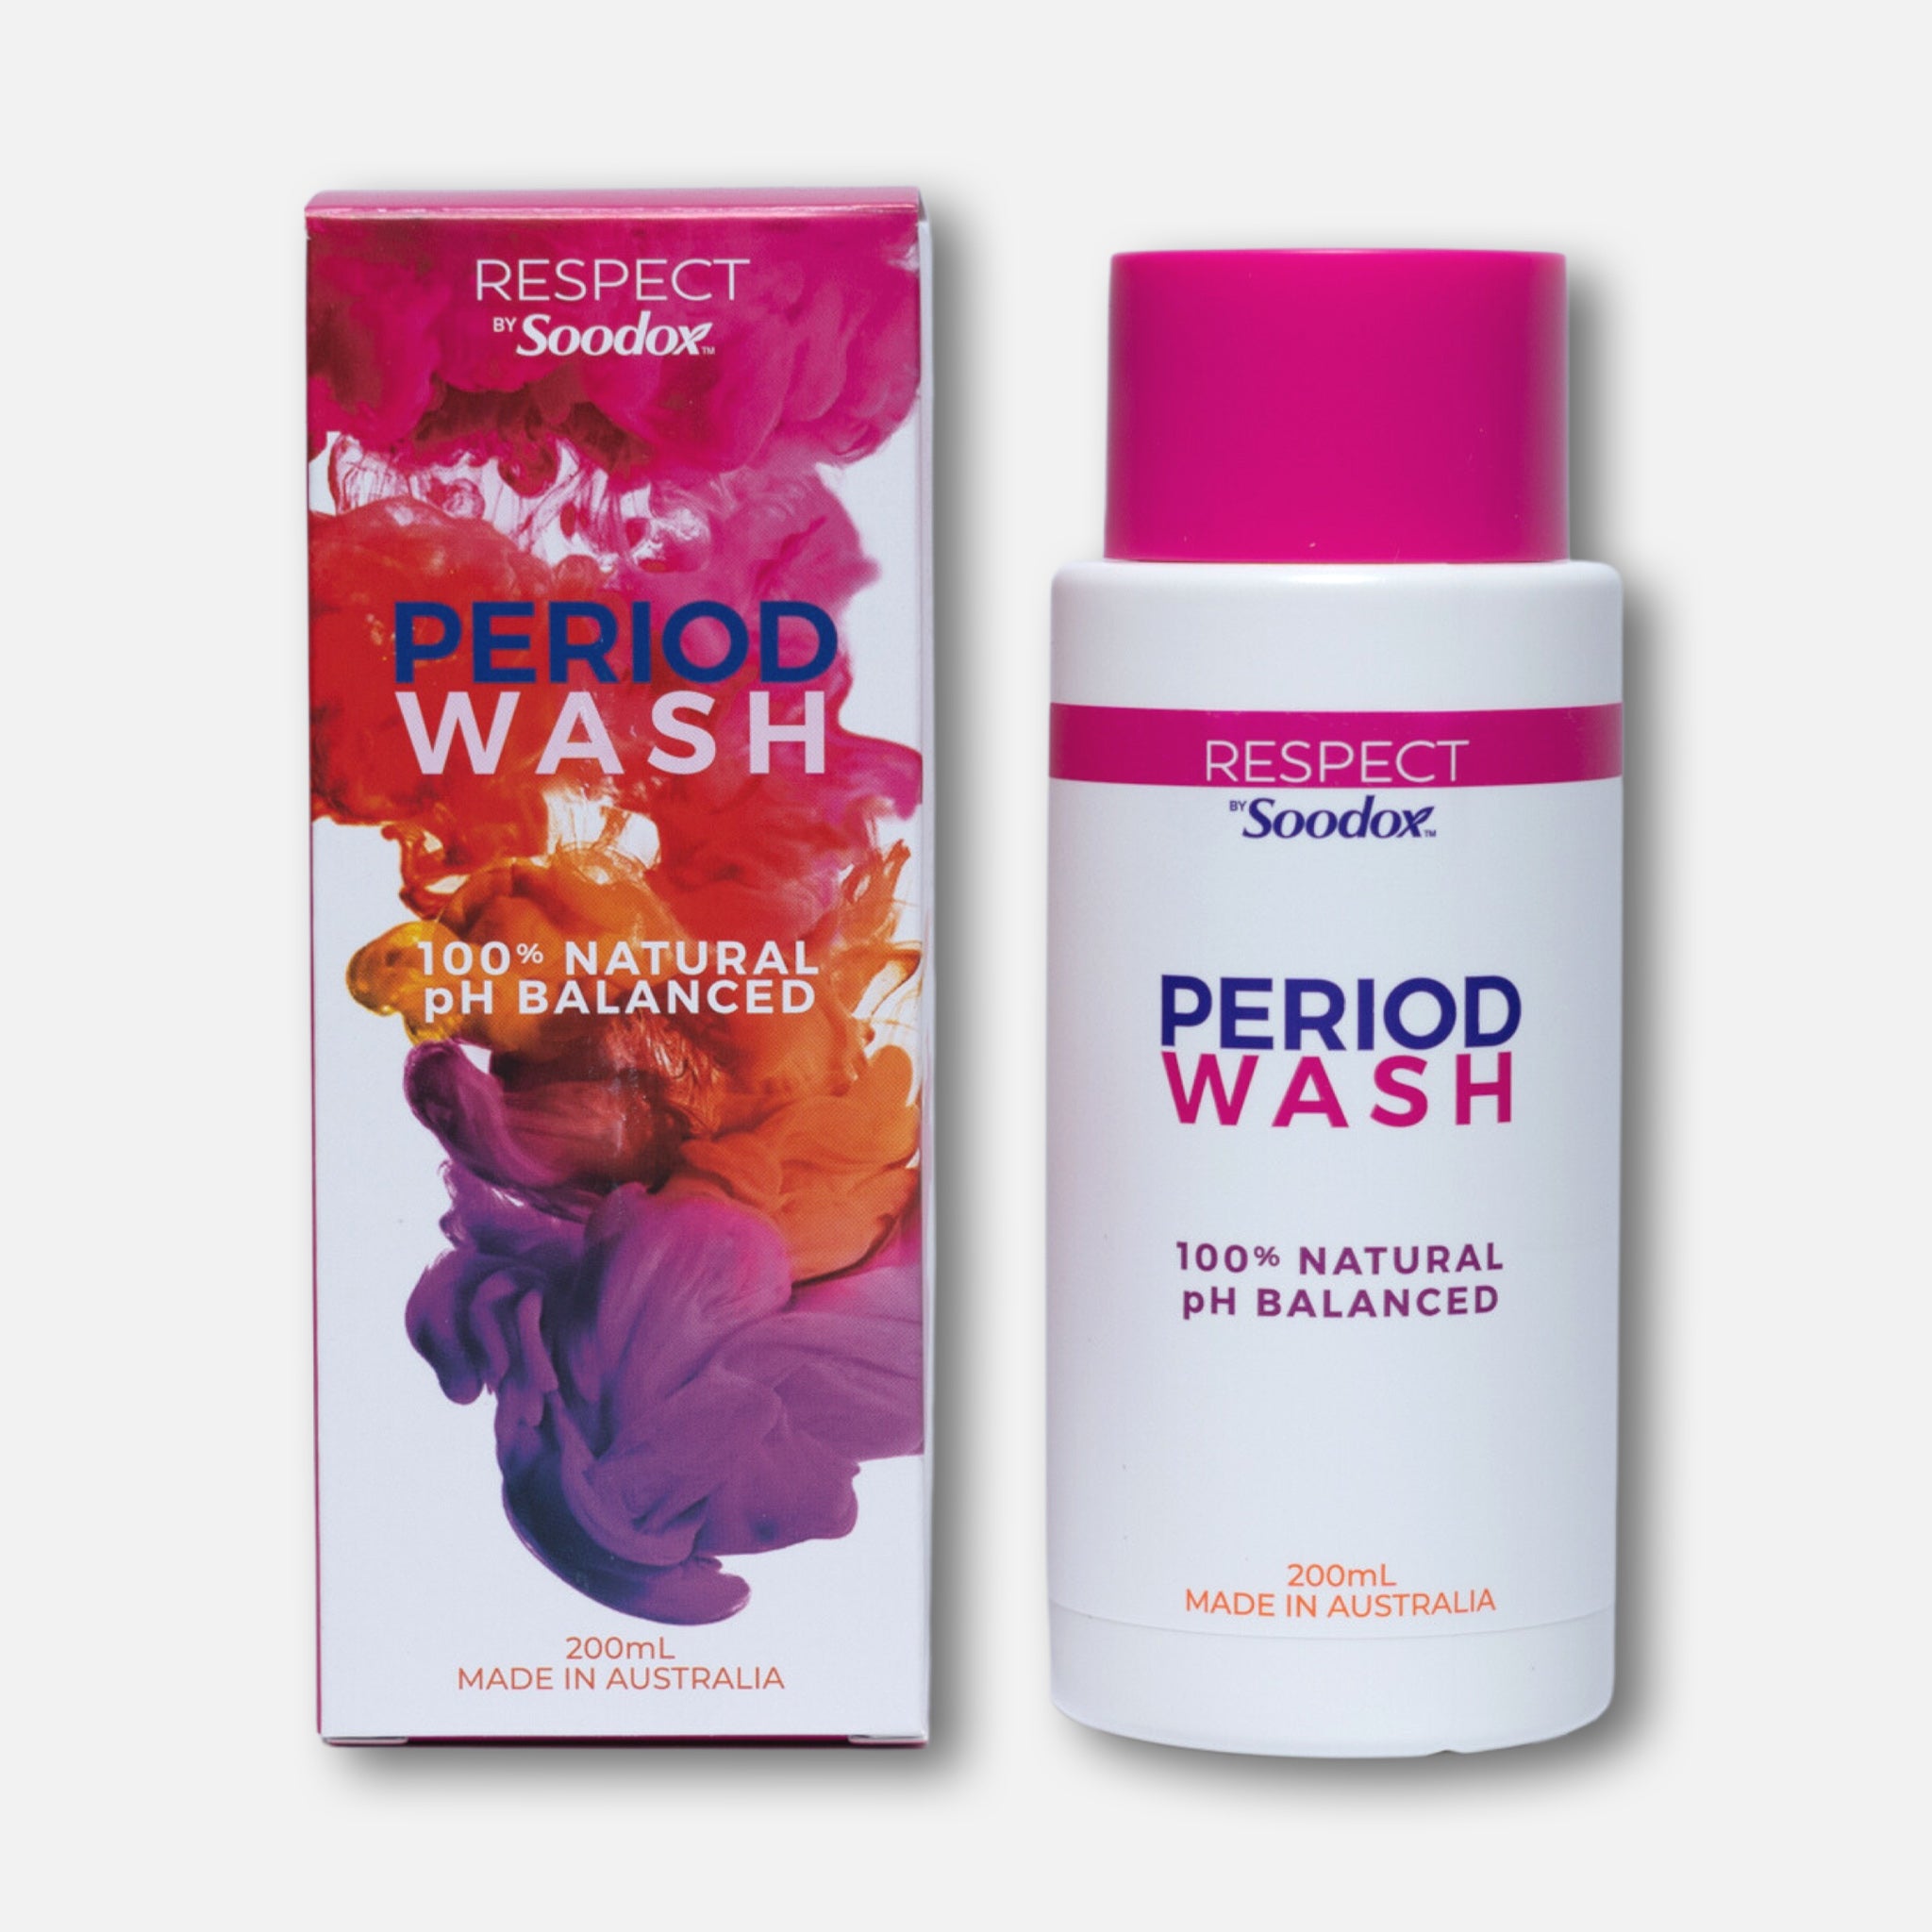 Natural Period Wash